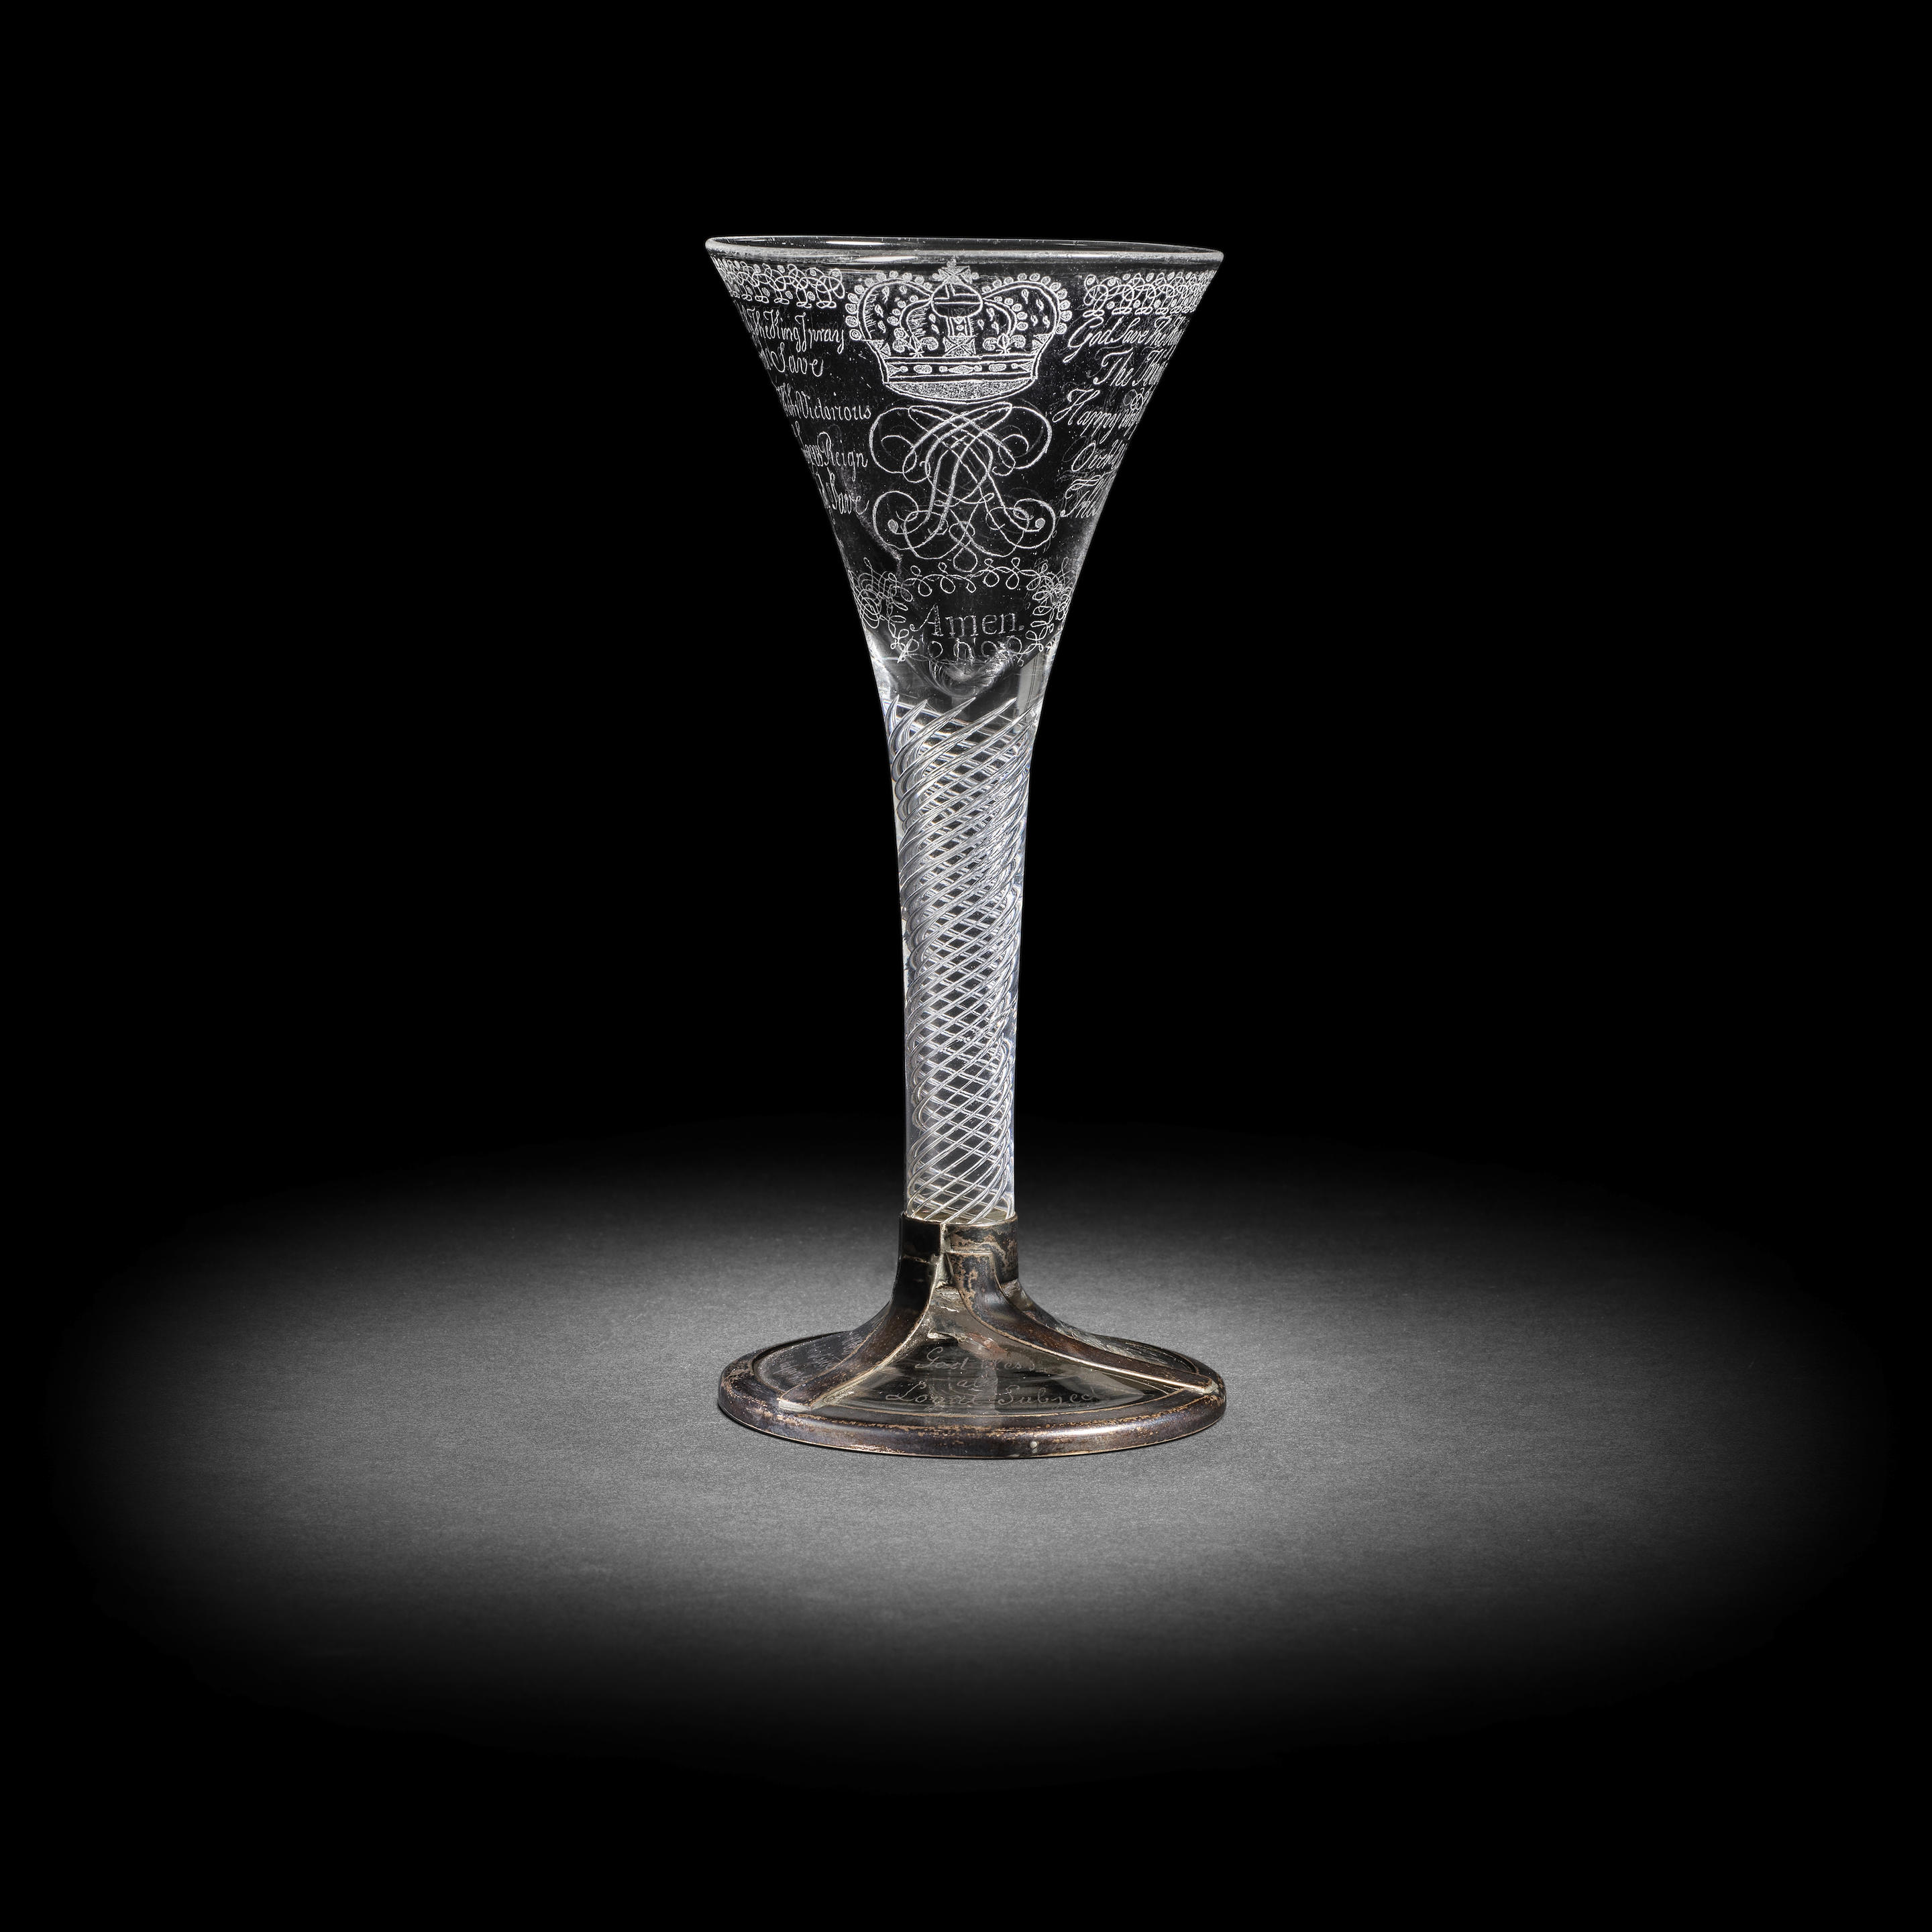 Royal Scot Crystal Large Wine Glasses Diamonds 2 p.